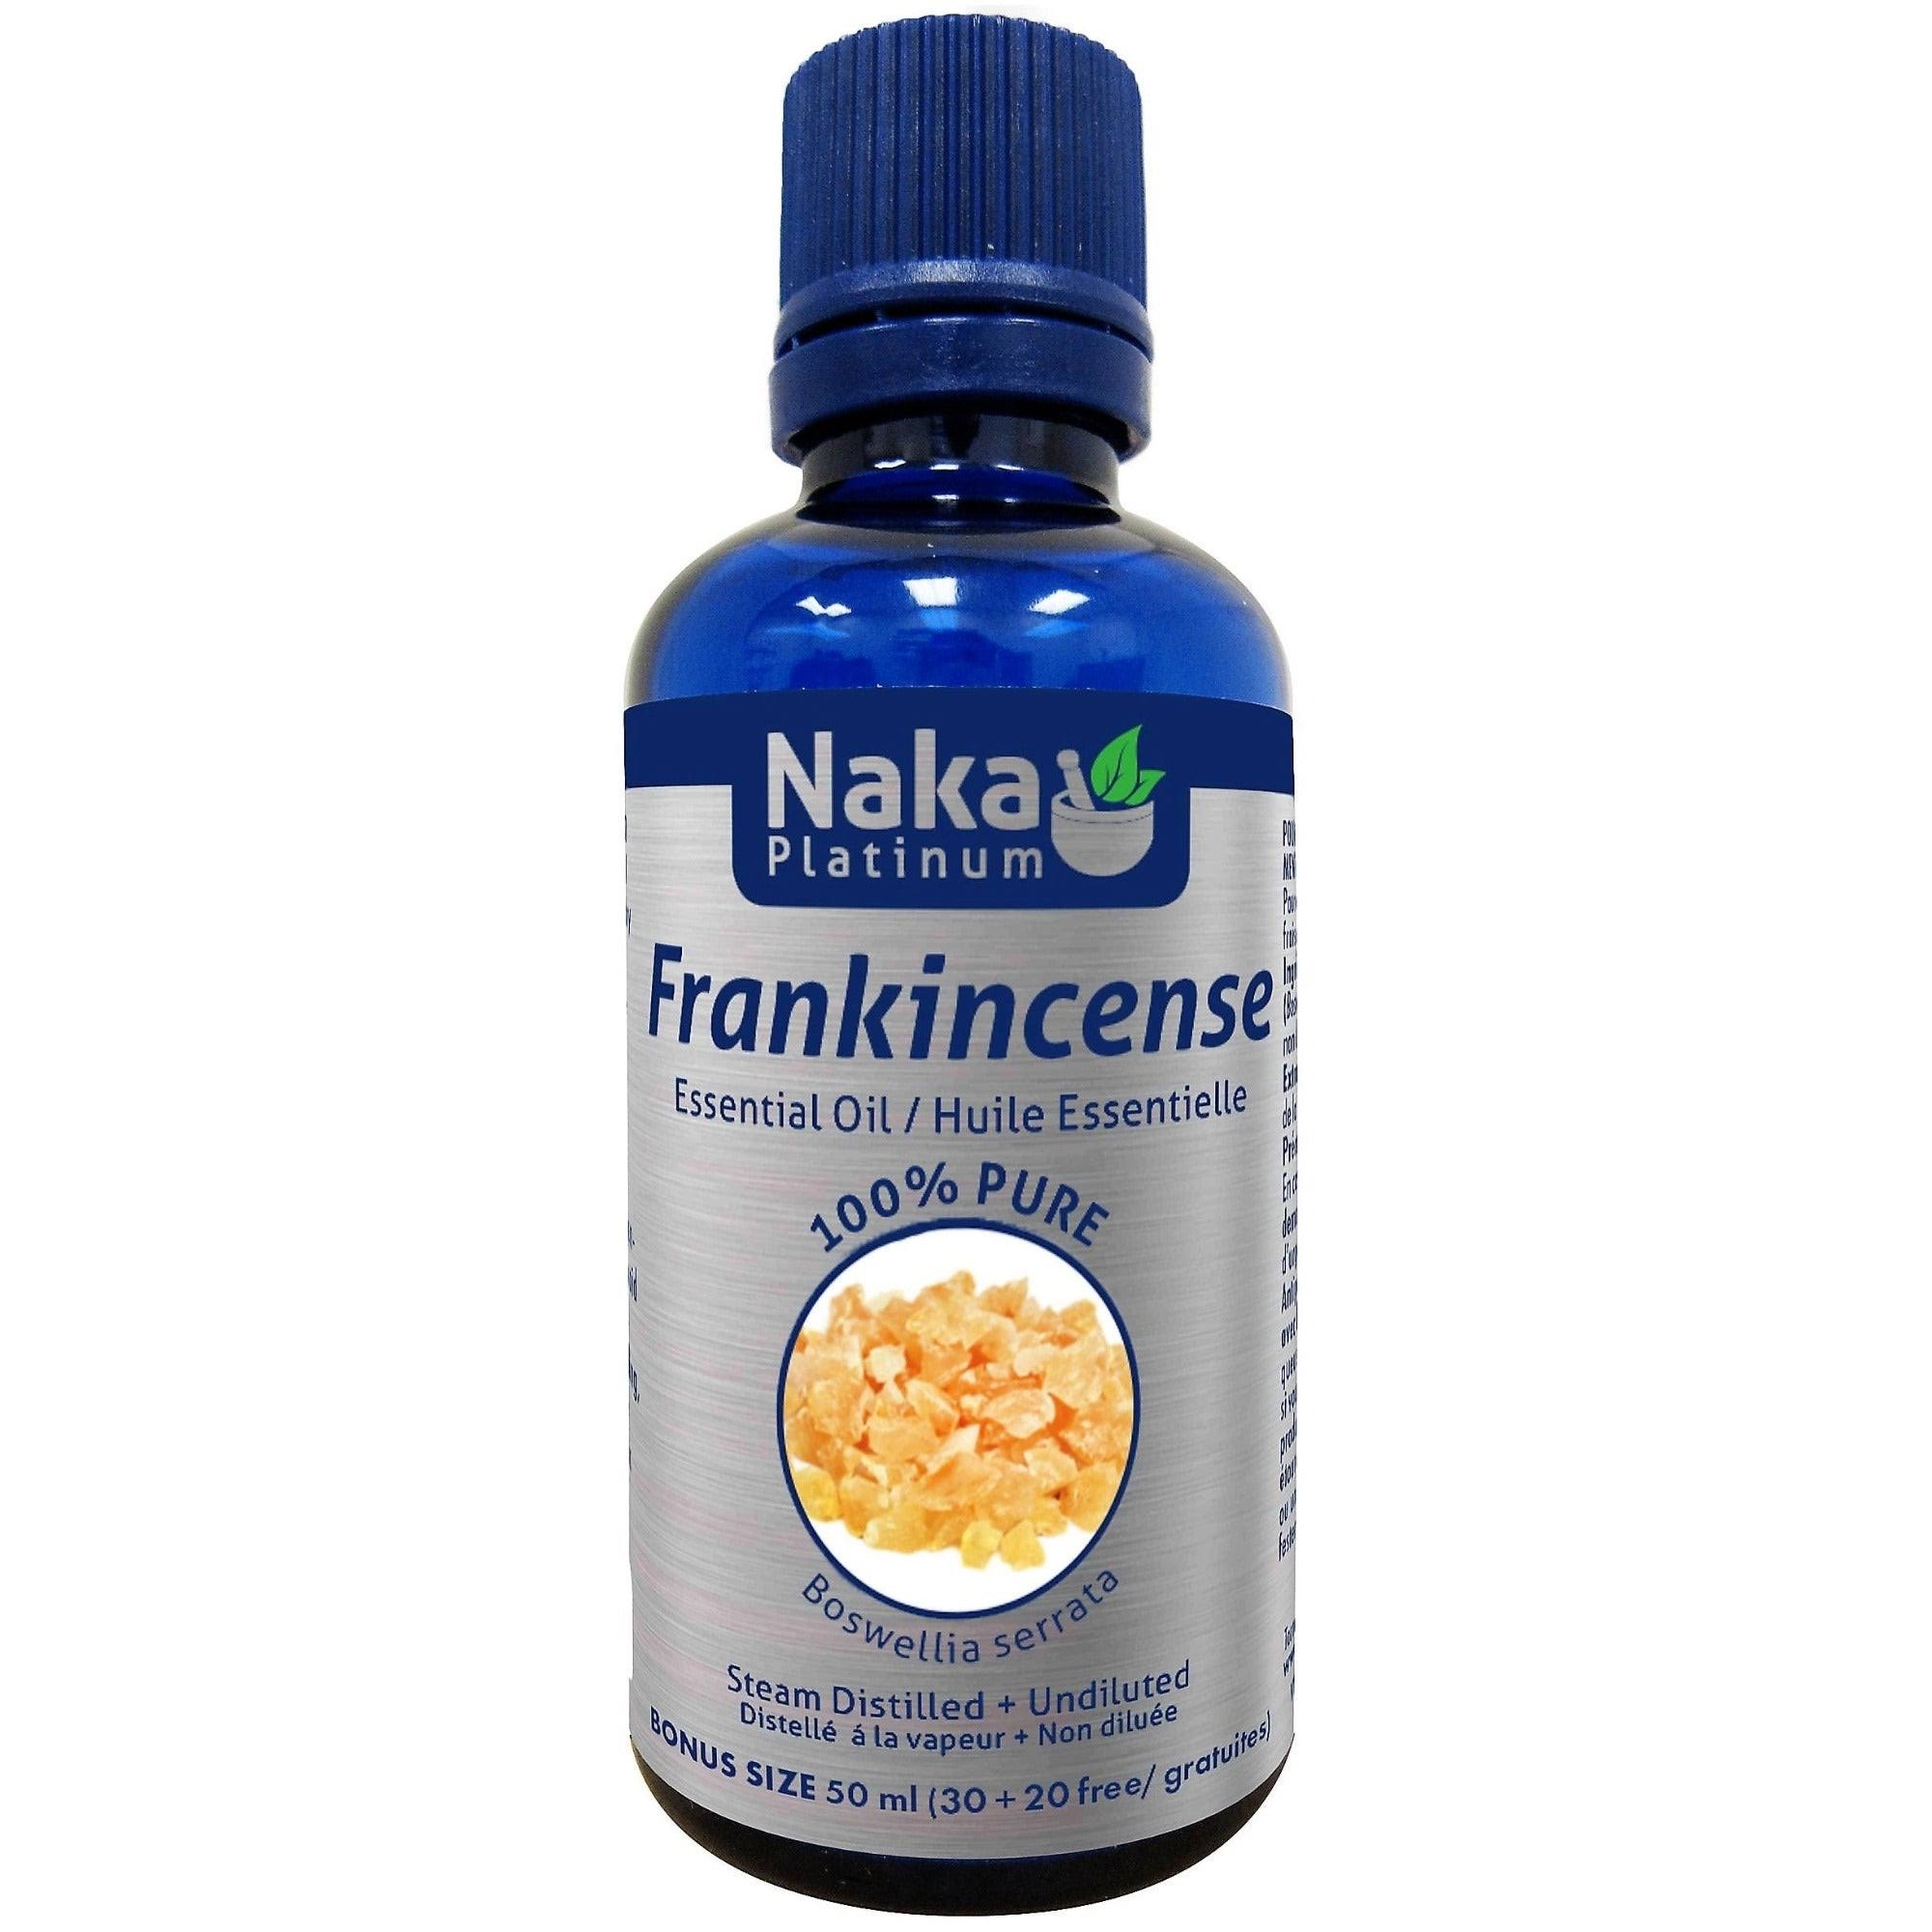 Naka 100% Pure Frankincense Essential Oil - 50ml + Bonus